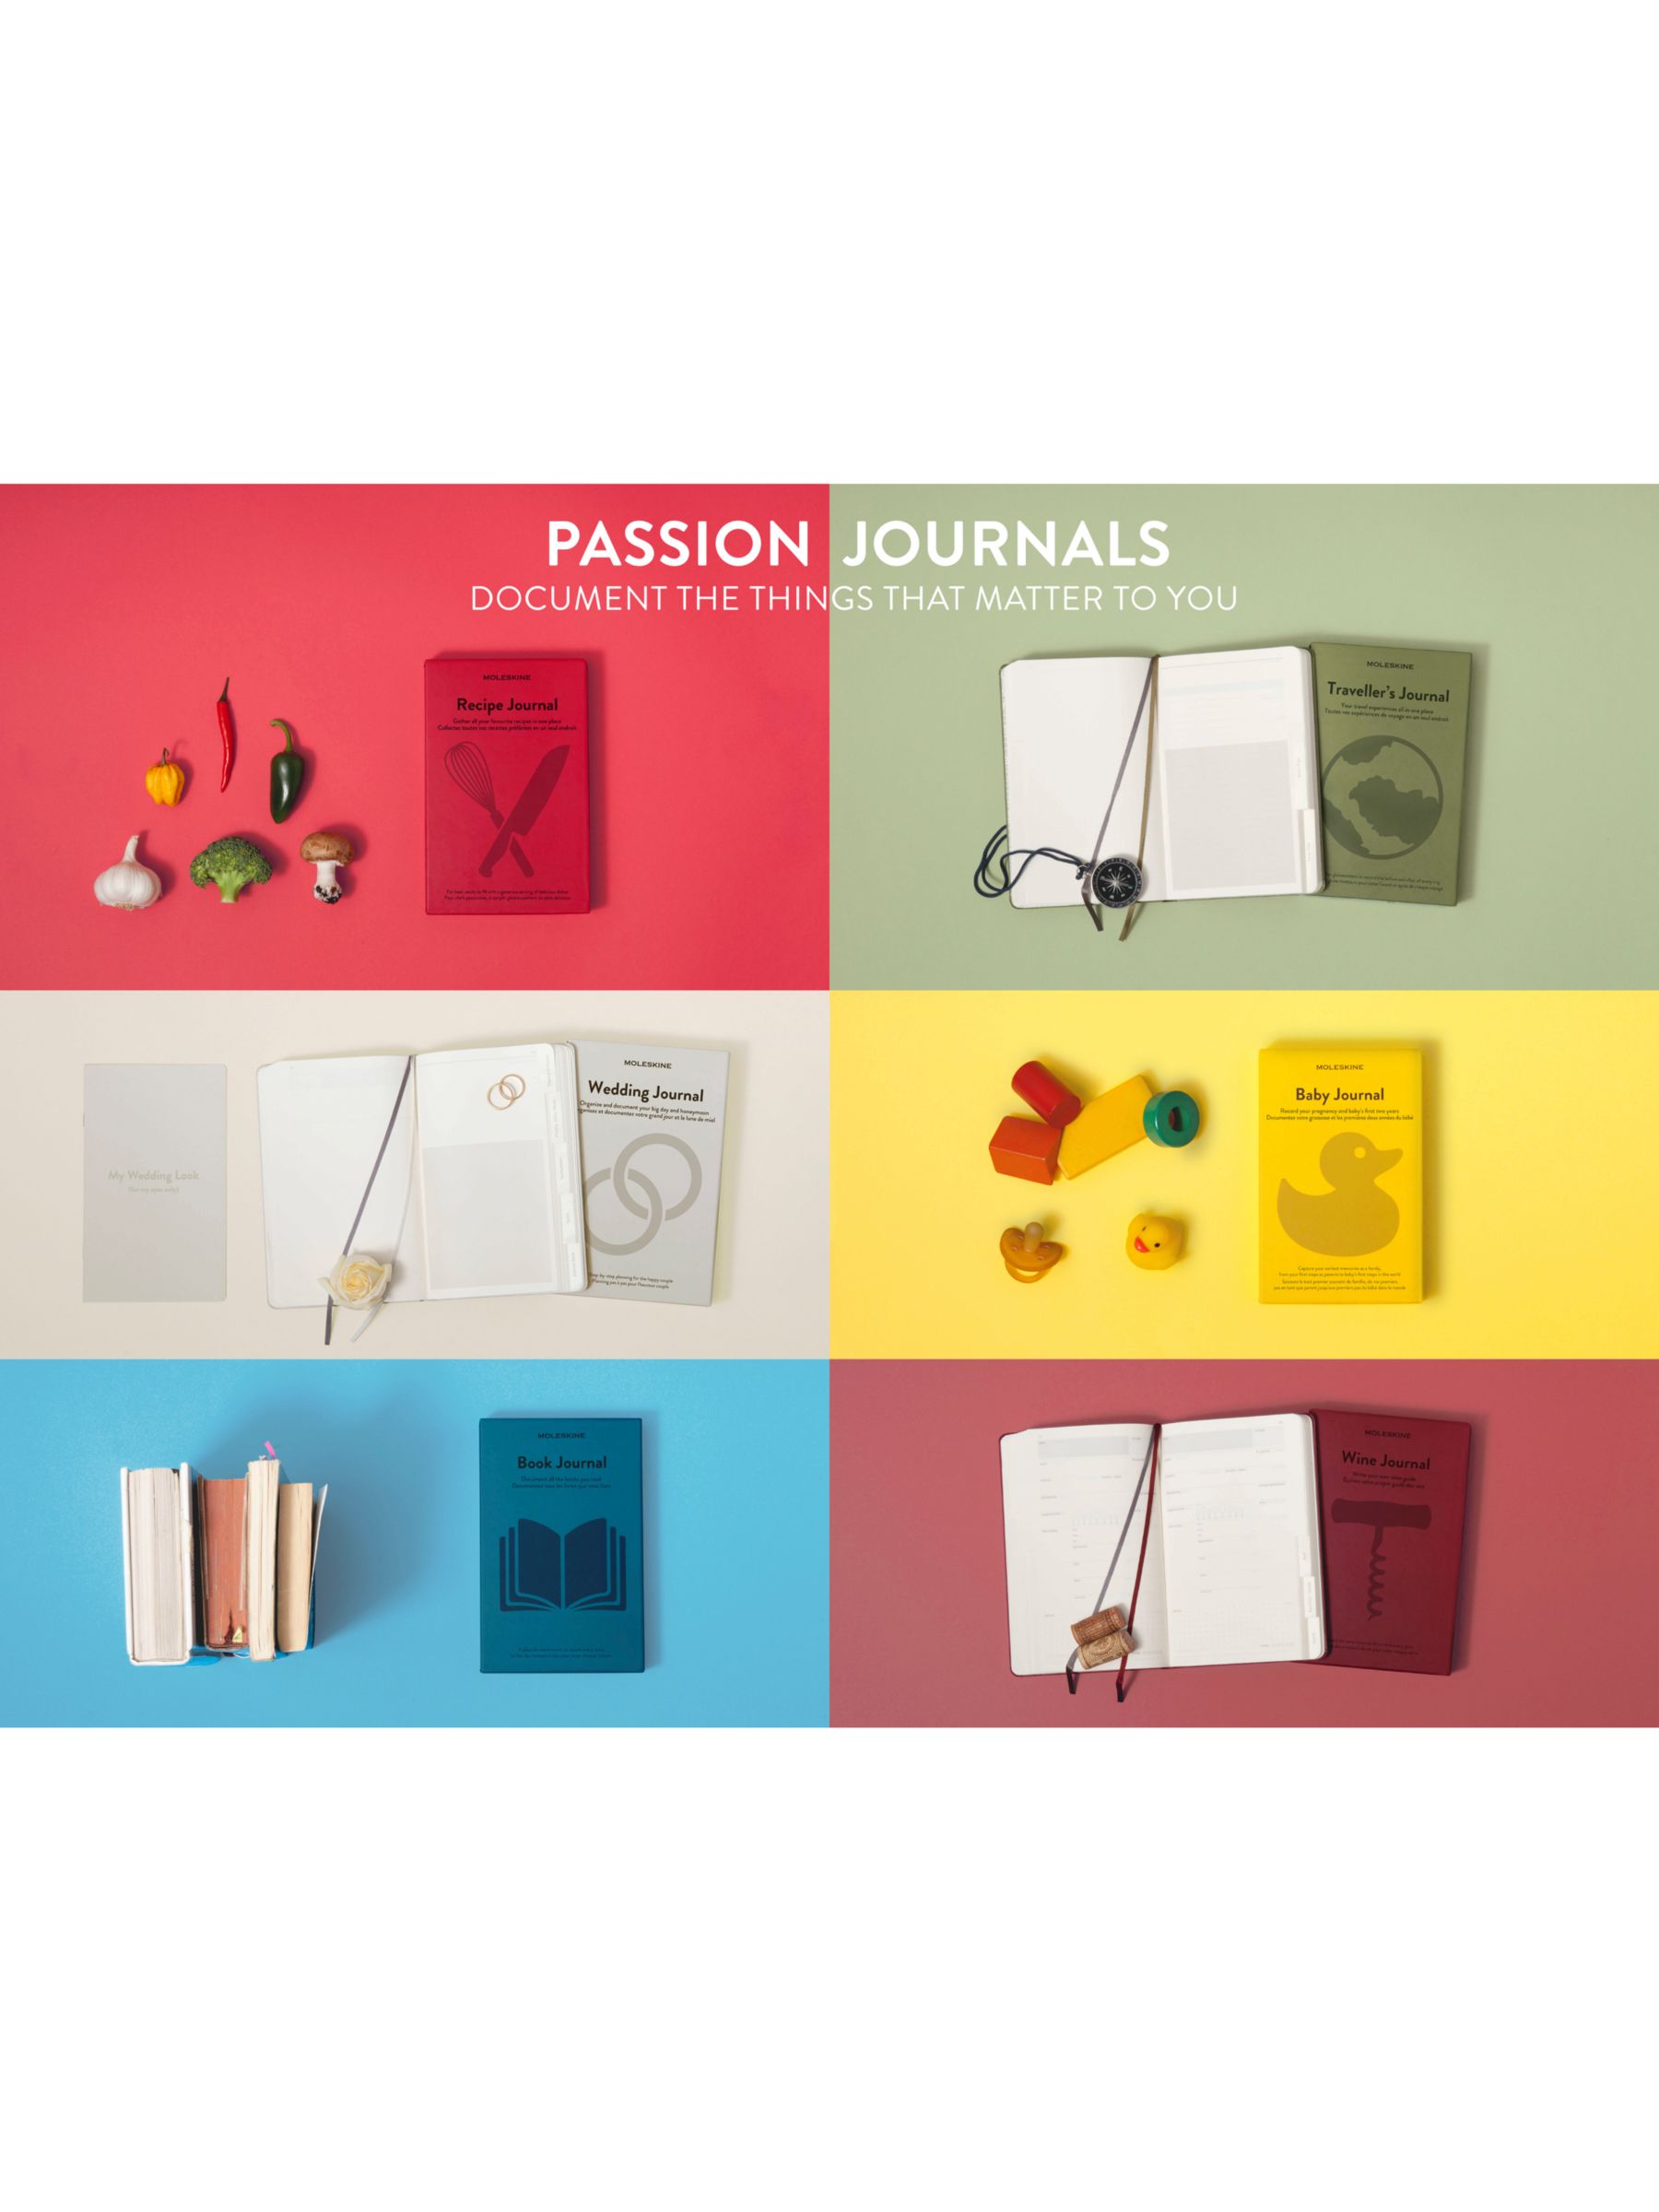 Fits Louis Vuitton Small Agenda Planner: Choose Calendar -Inserts  -Paper-Pouches